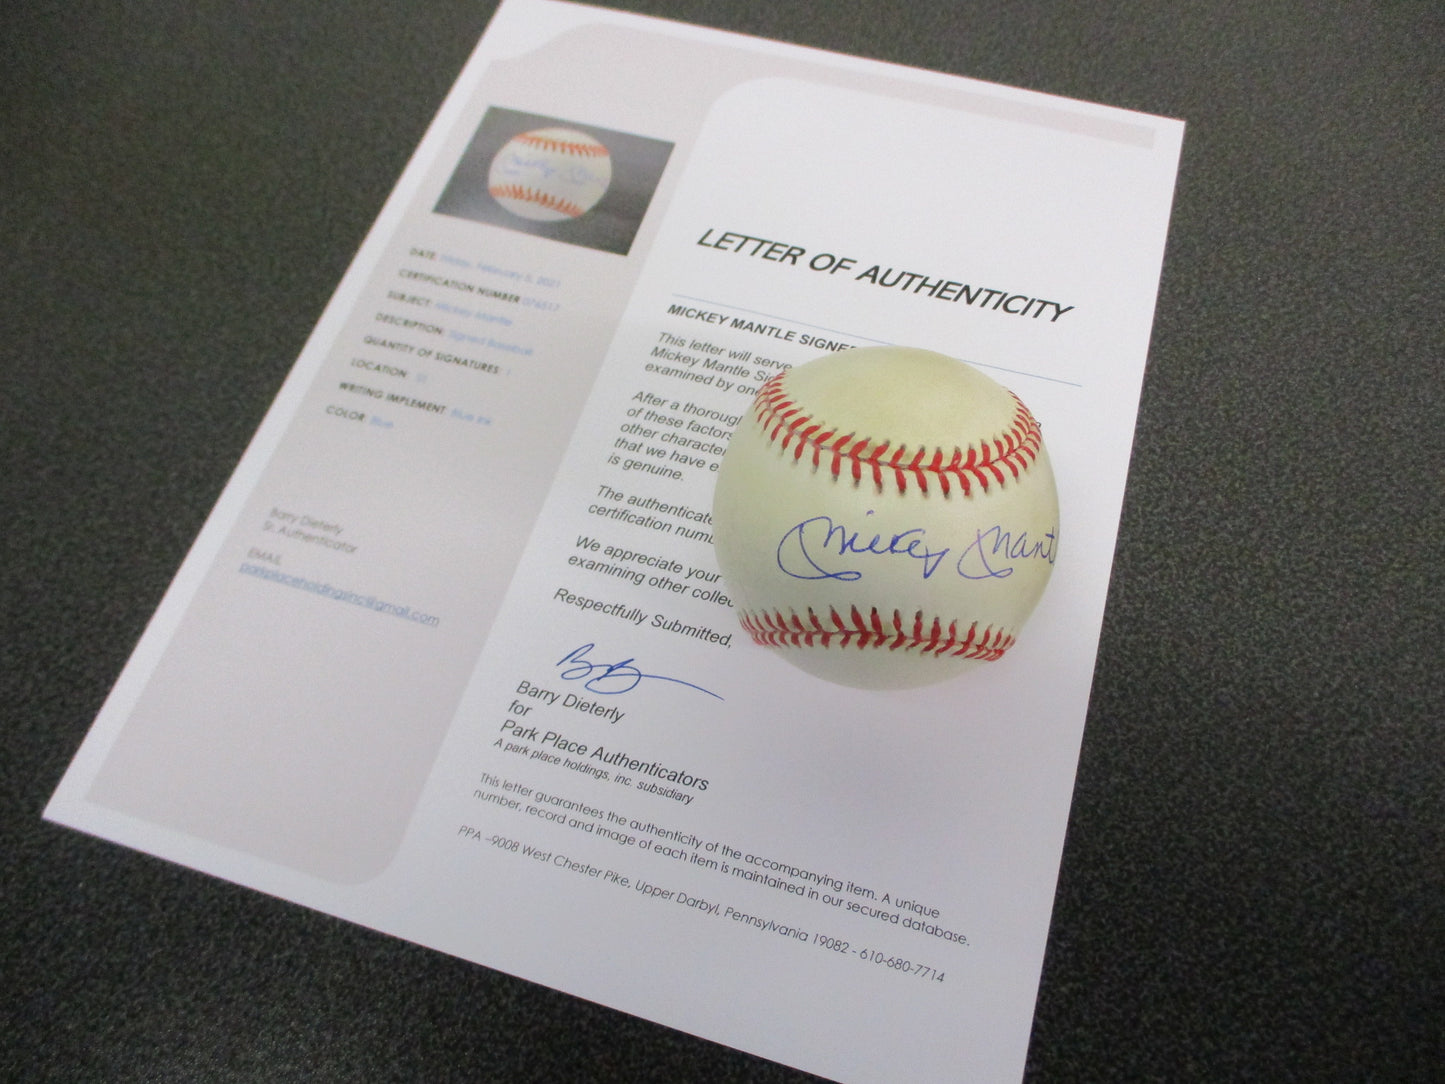 Mickey Mantle Signed Baseball - A Legendary Autographed Keepsake